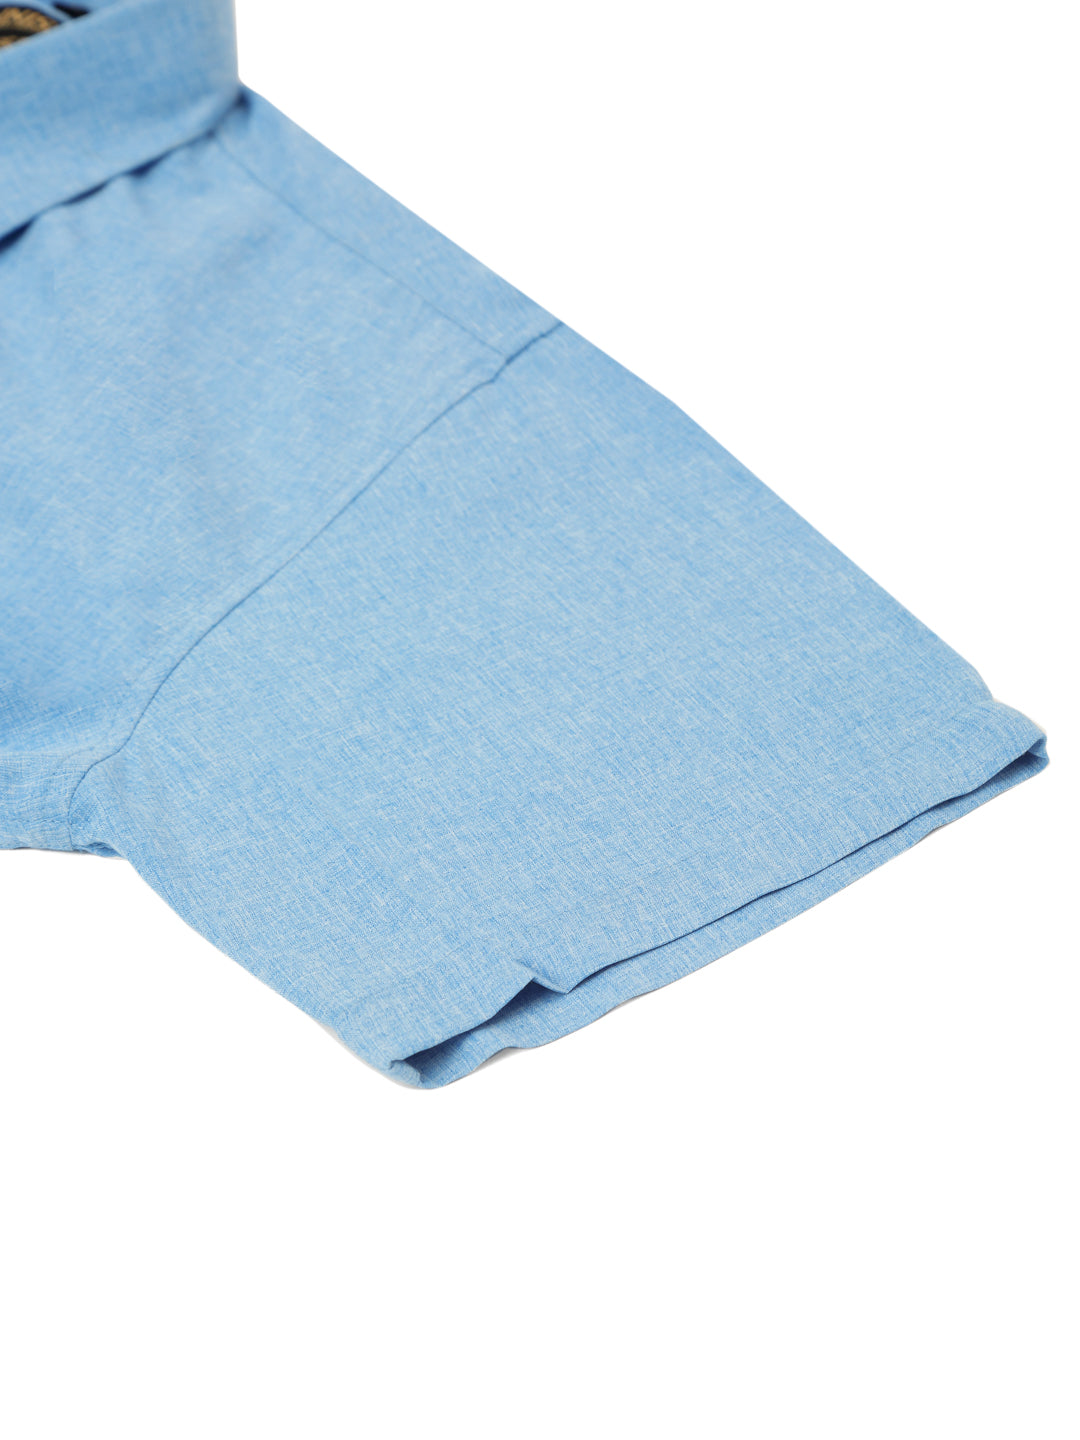 Jainish Men's Cotton Solid Half Sleeve Formal Shirts